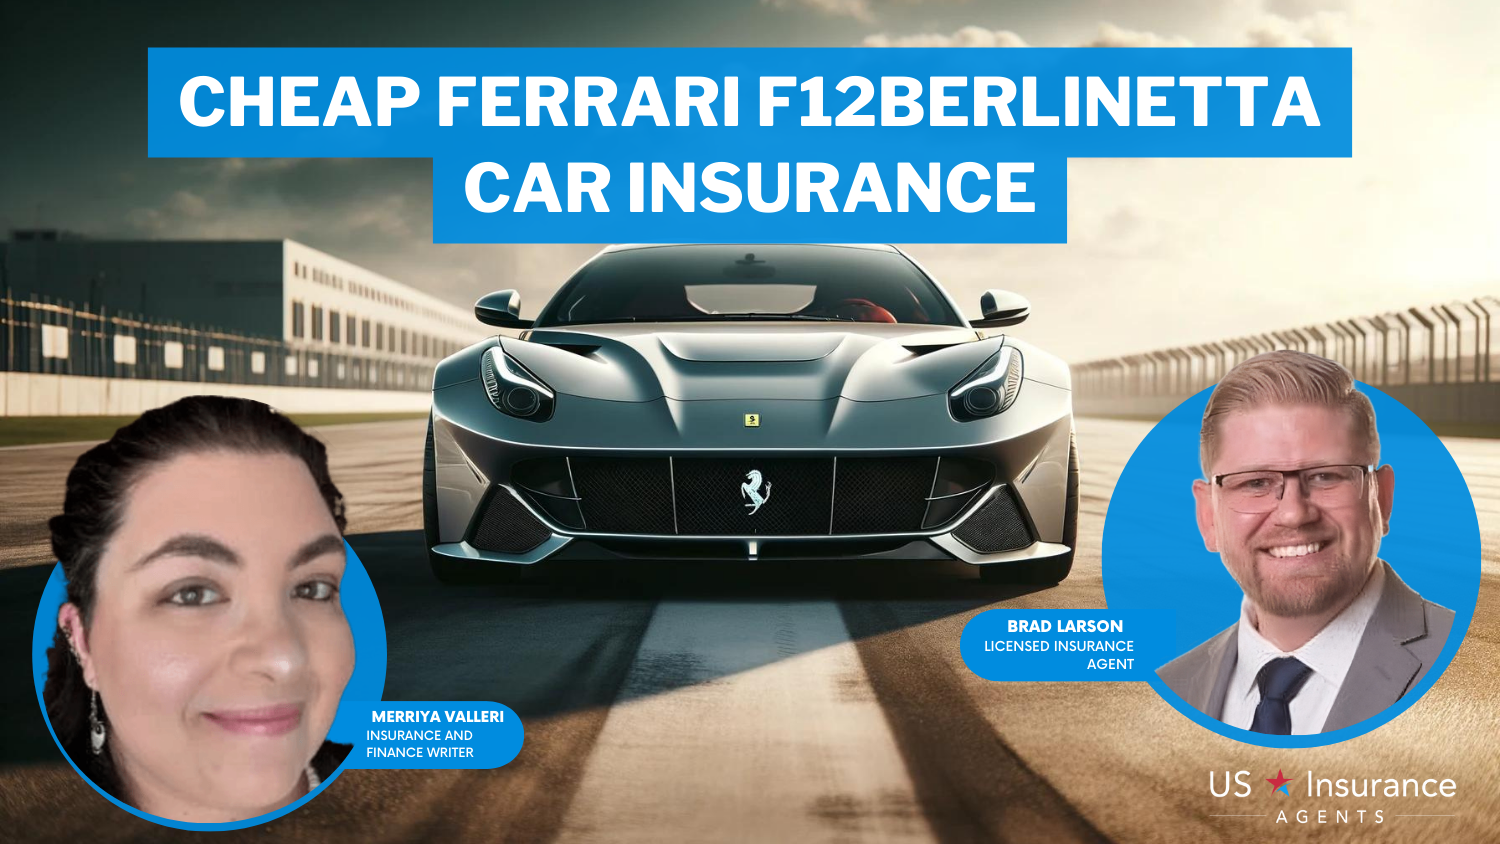 Geico: cheap Ferrari F12berlinetta car insurance, auto insurance